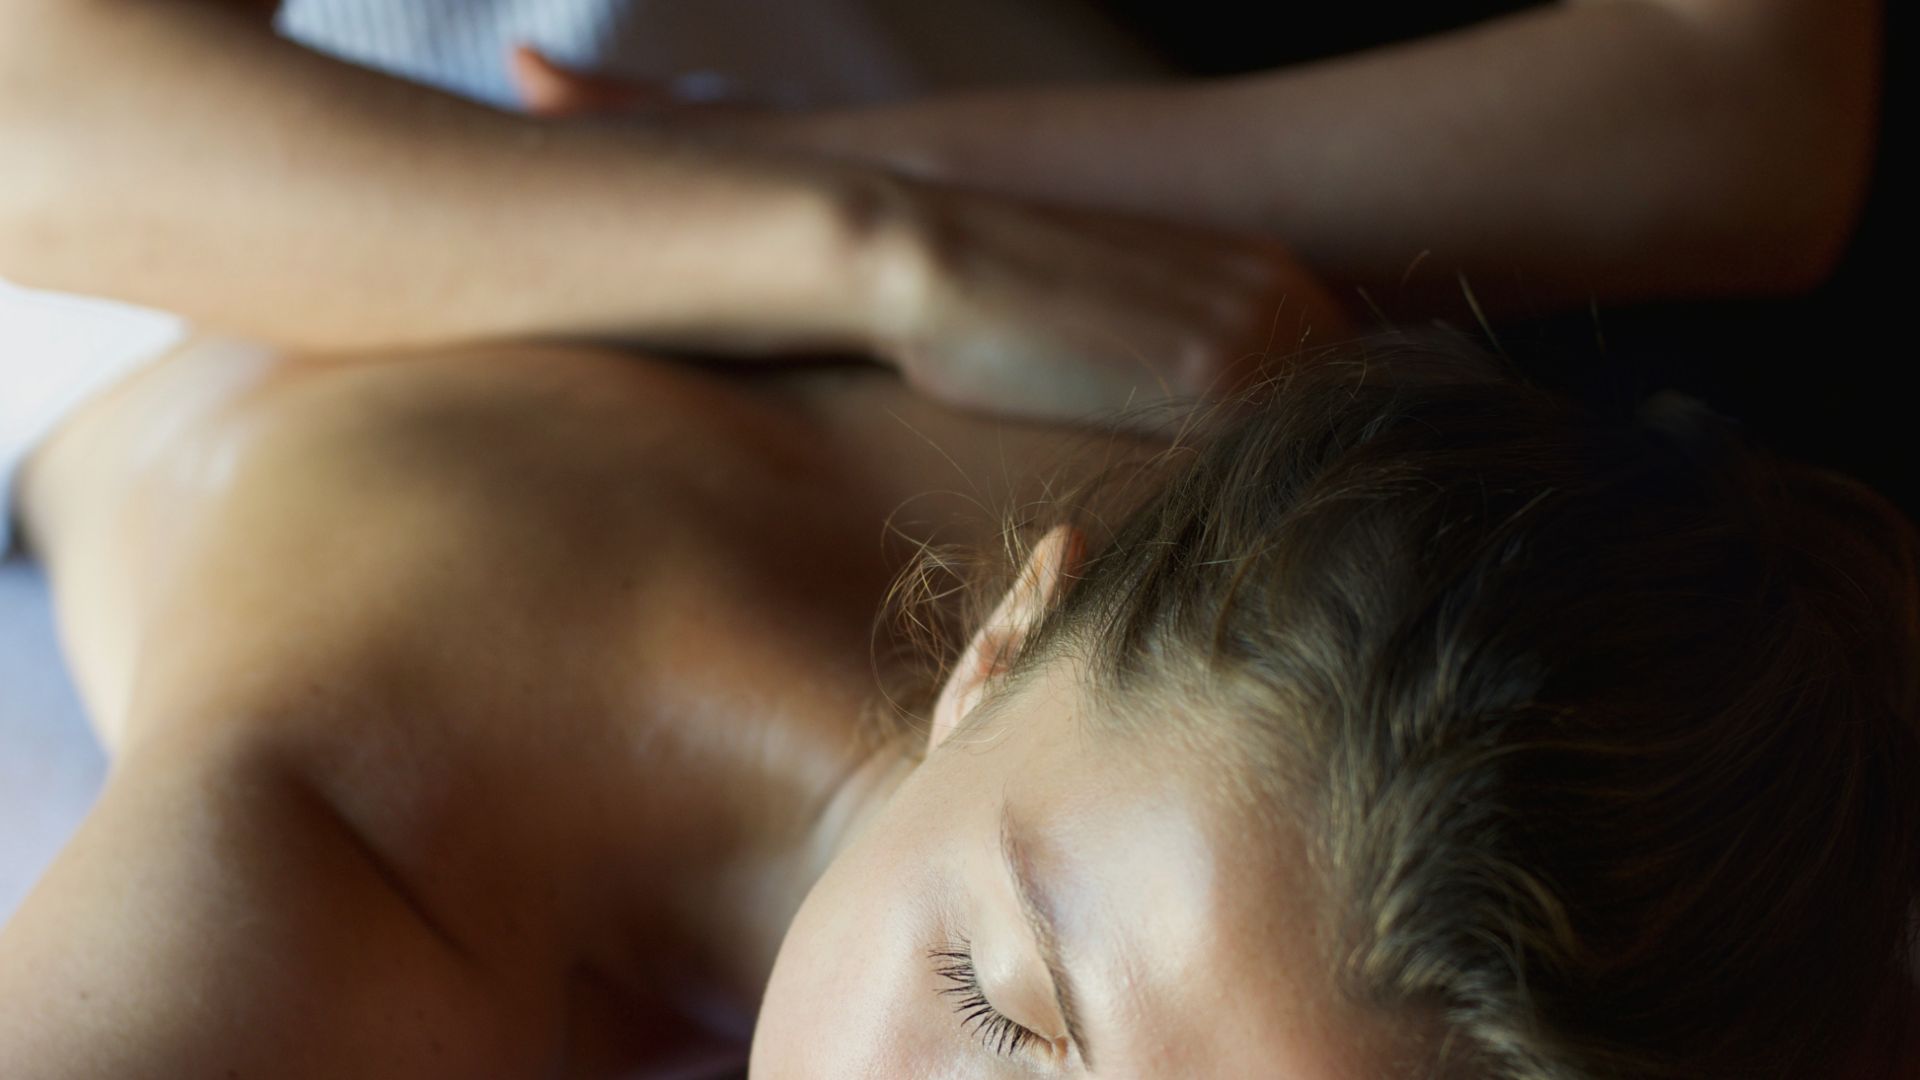 Woman receiving back massage 